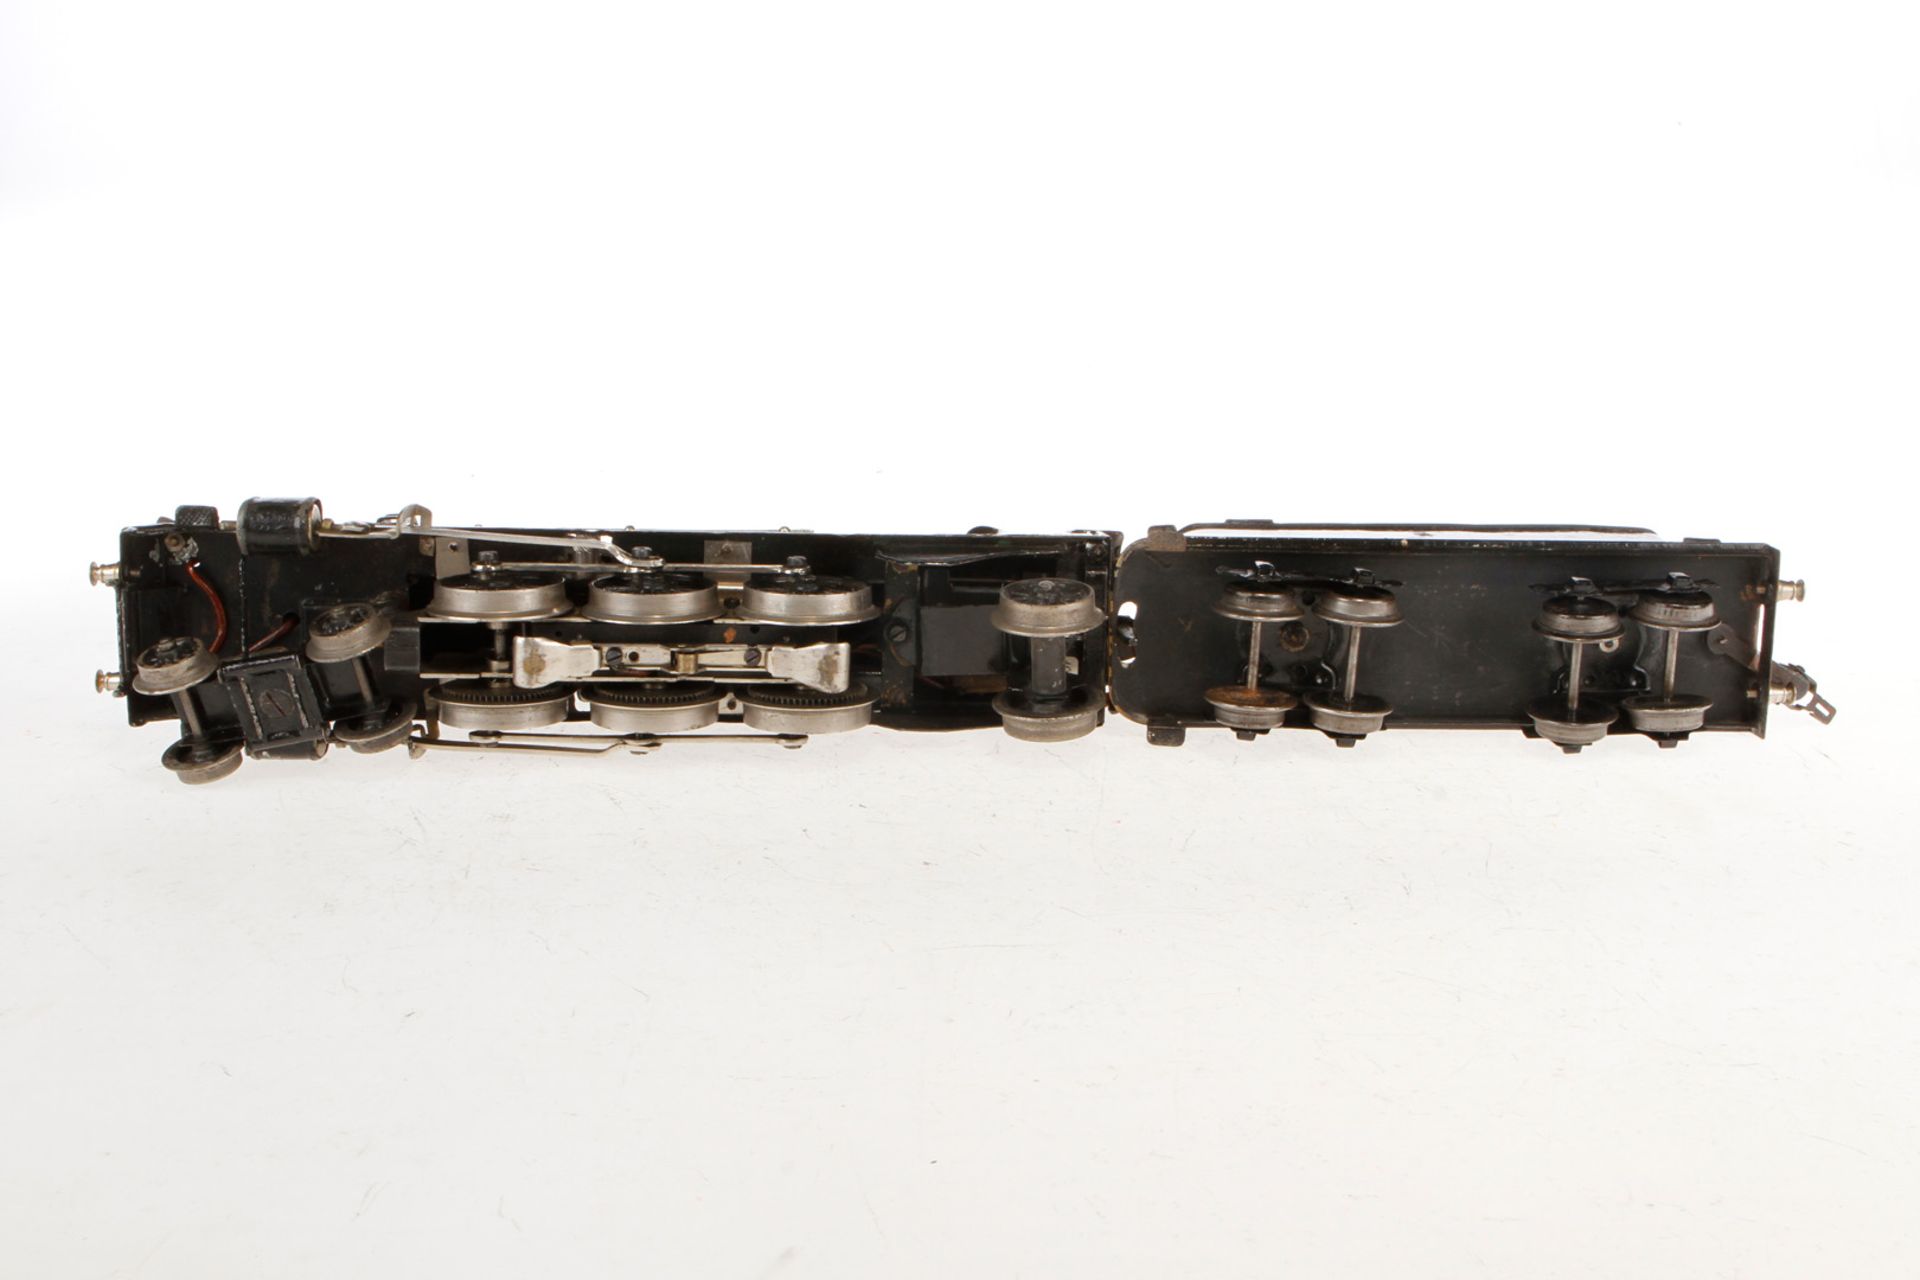 Märklin franz. 2-C-1 Dampflok H 64/13020 PLM, Spur 0, elektr., schwarz, mit Tender und 2 el. bel. - Image 3 of 3